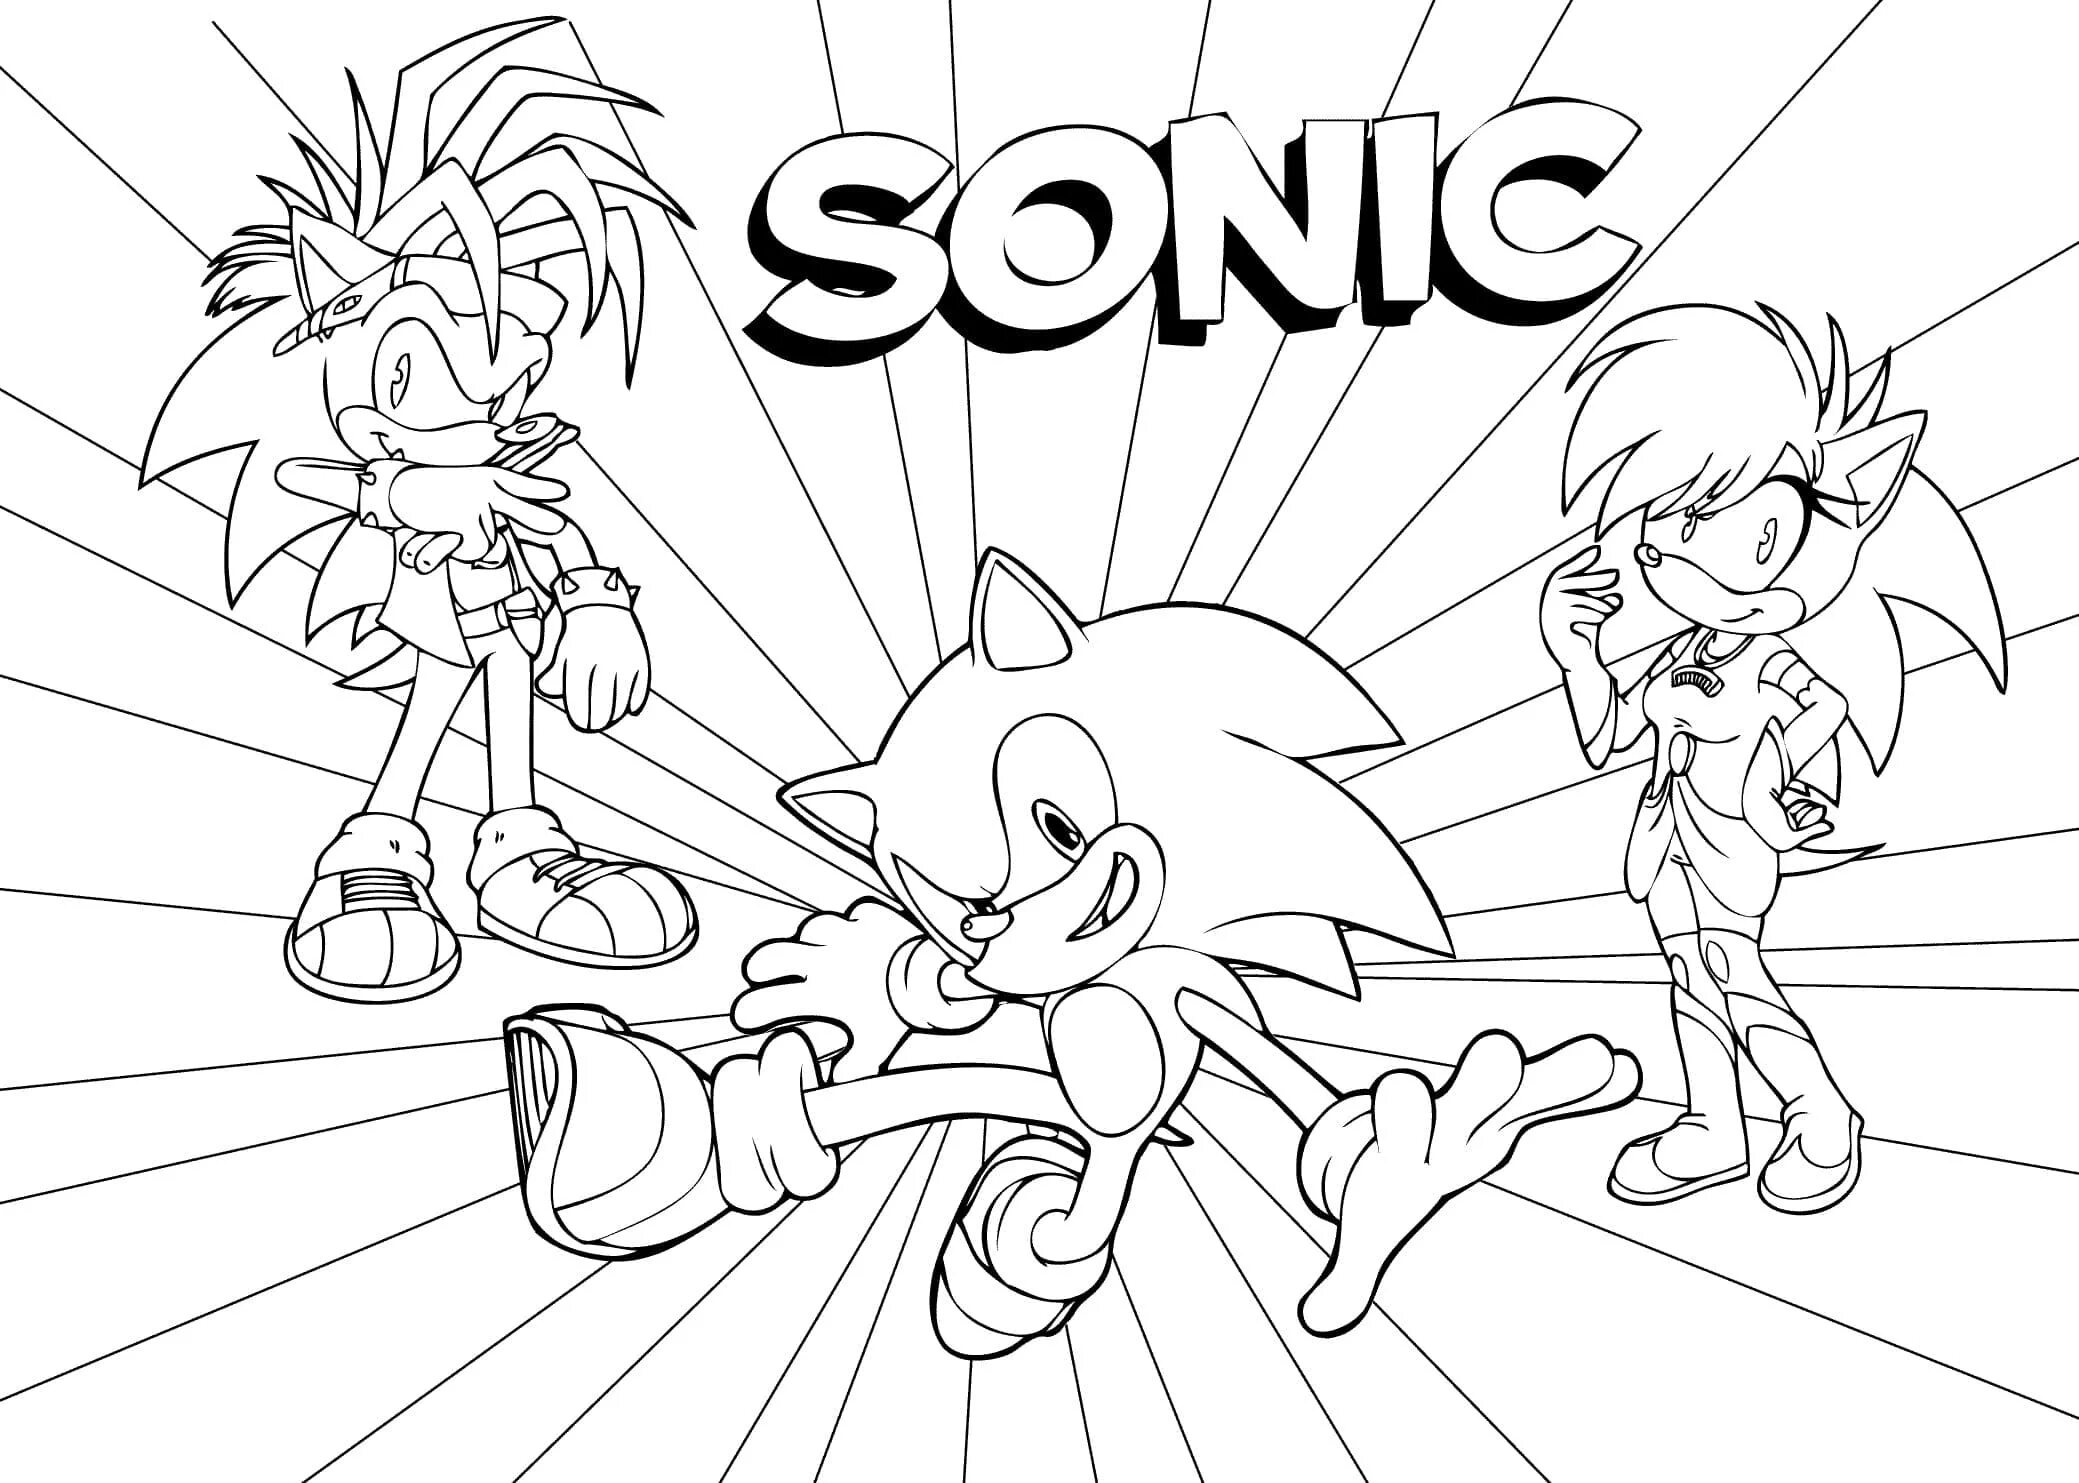 Sonic teos #1